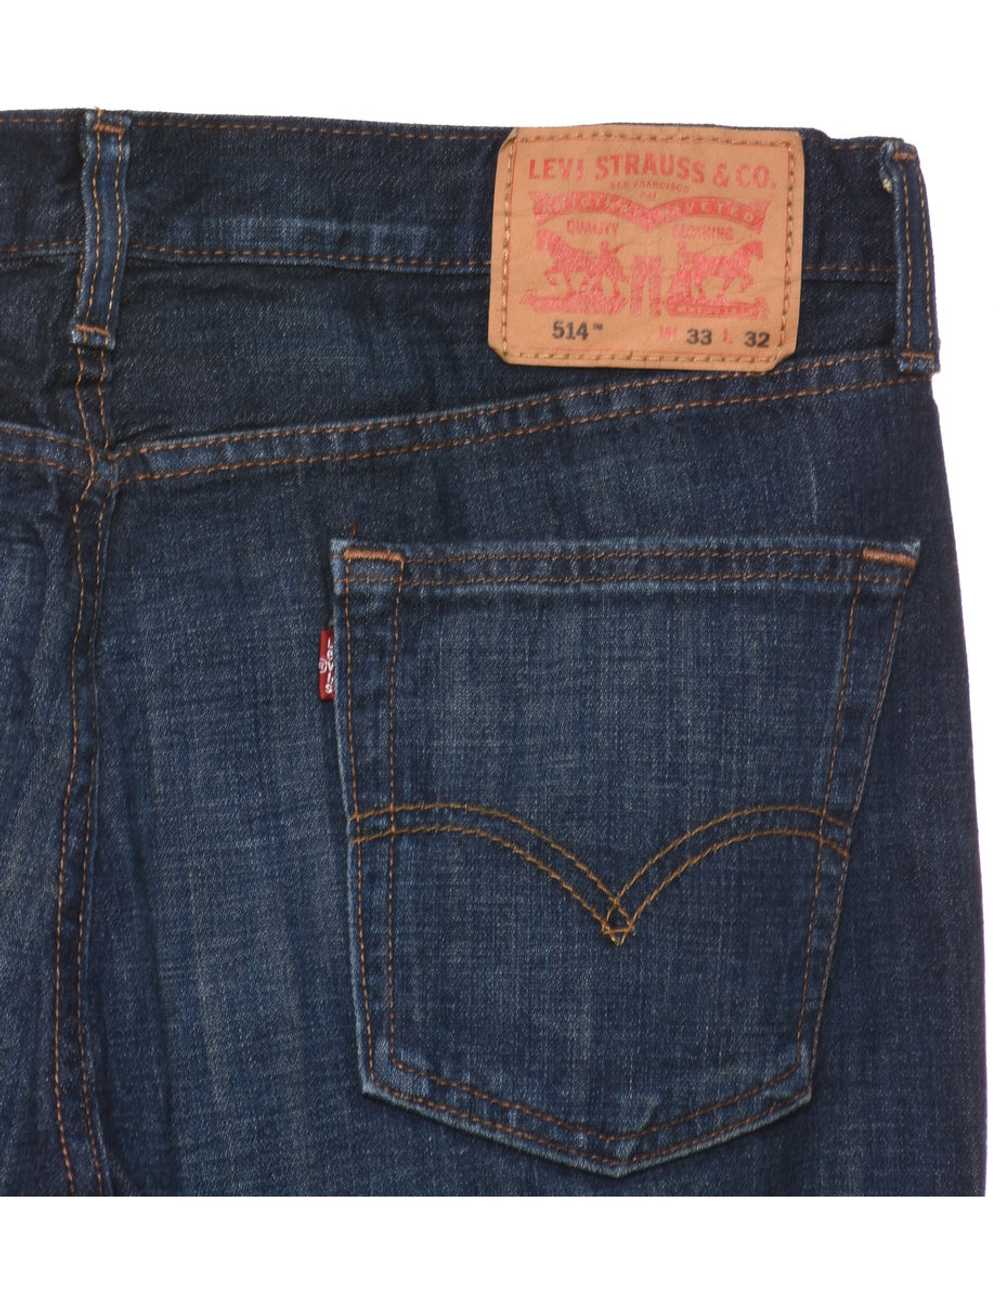 514's Fit Levi's Dark Wash Jeans - W34 L32 - image 4